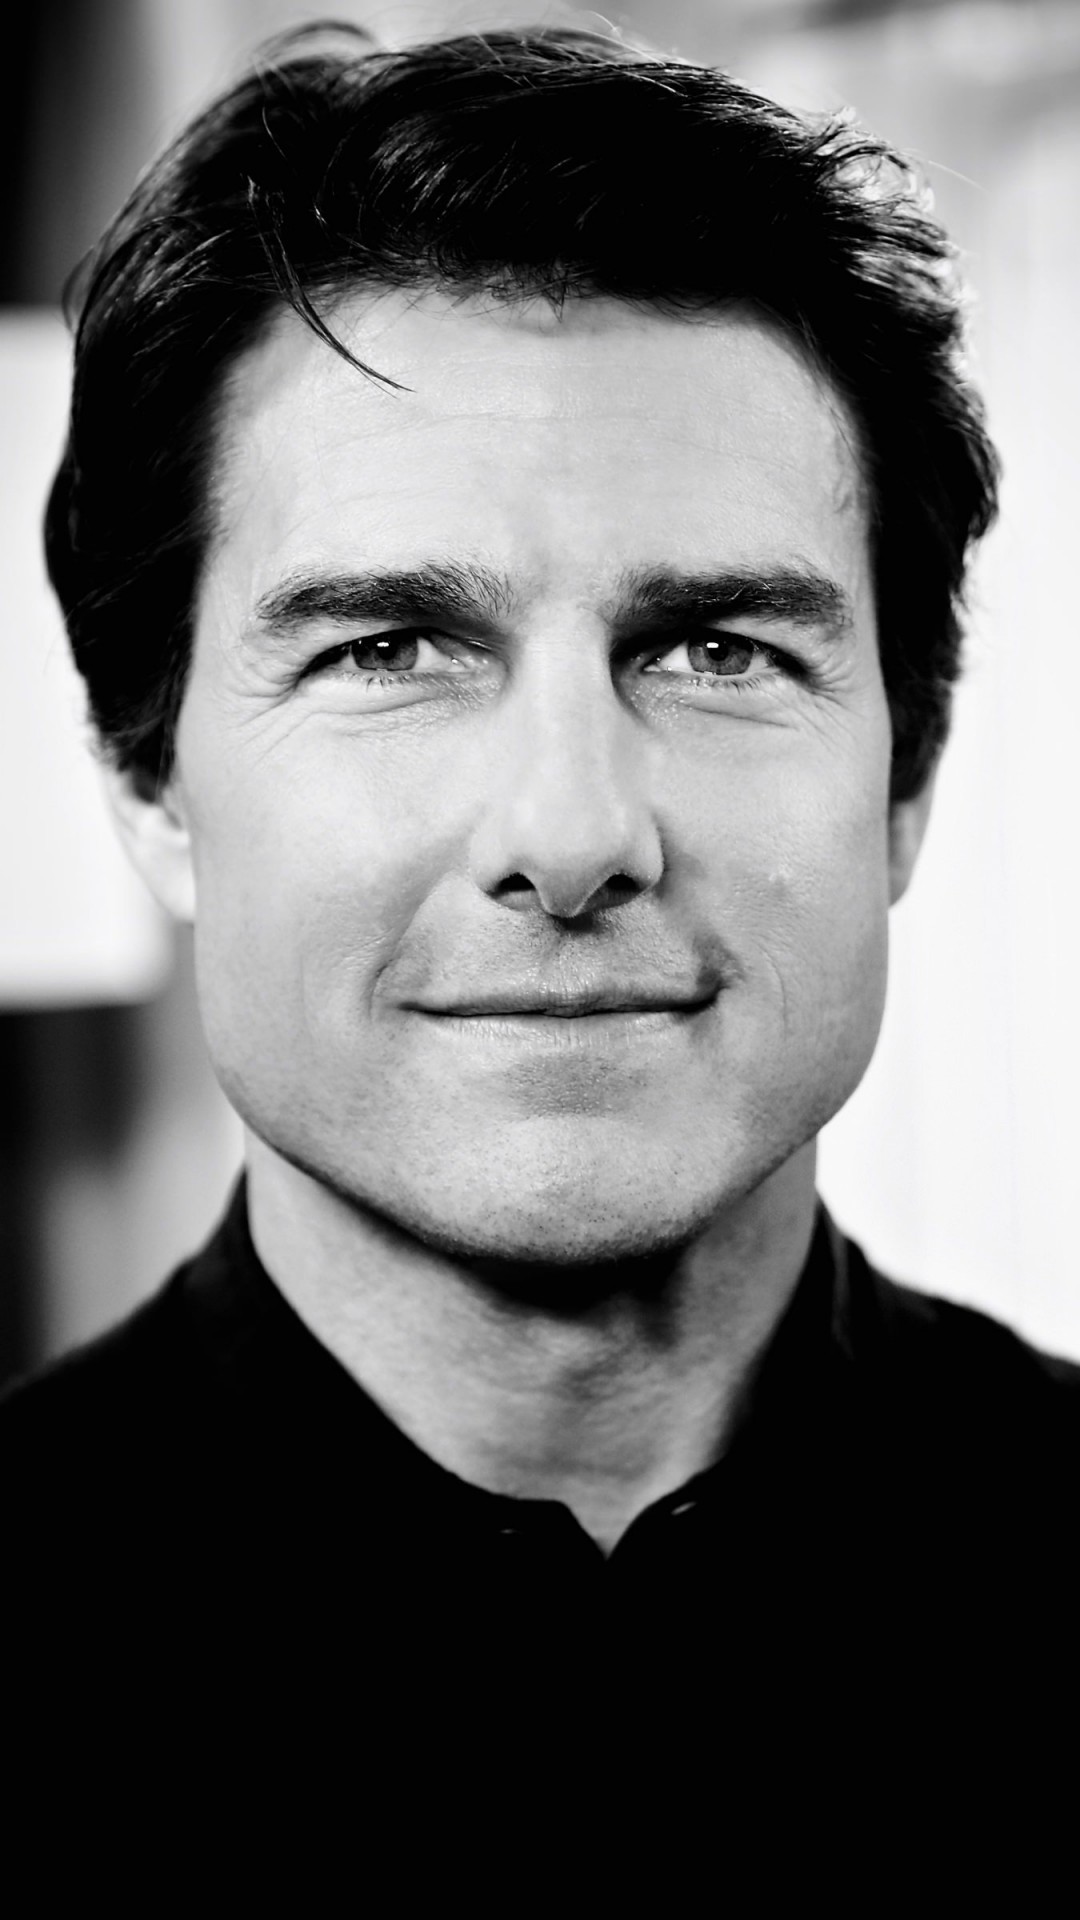 Tom Cruise Black & White Portrait Wallpaper for SAMSUNG Galaxy S4